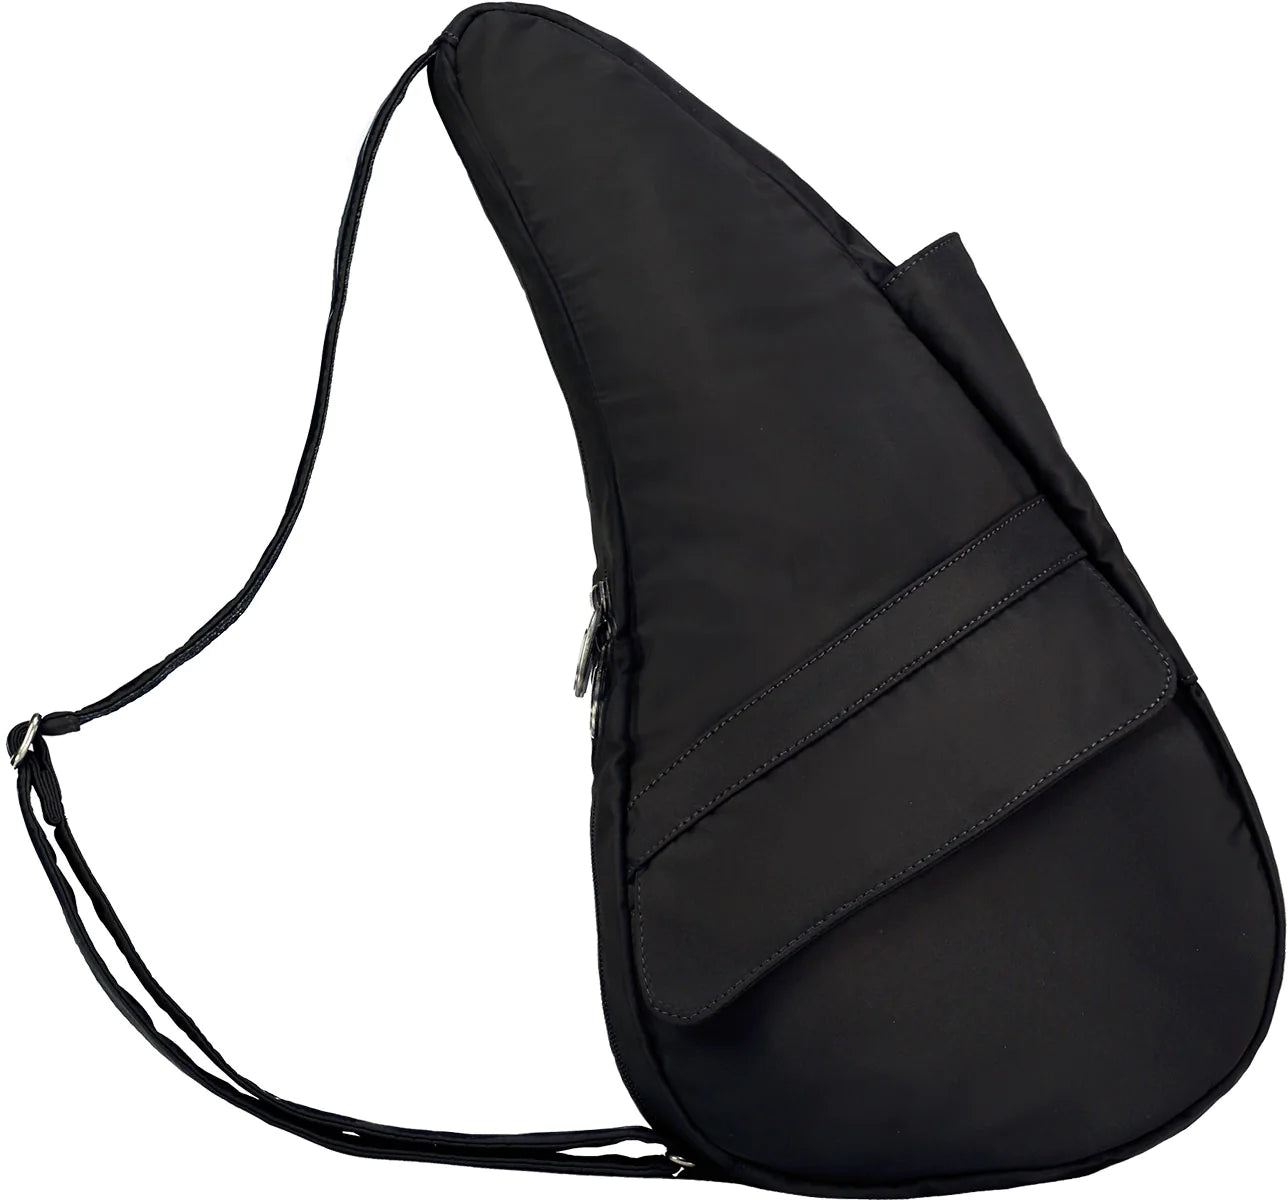 Ameribag Healthy Back Bag Tote Microfiber Small Color: Black